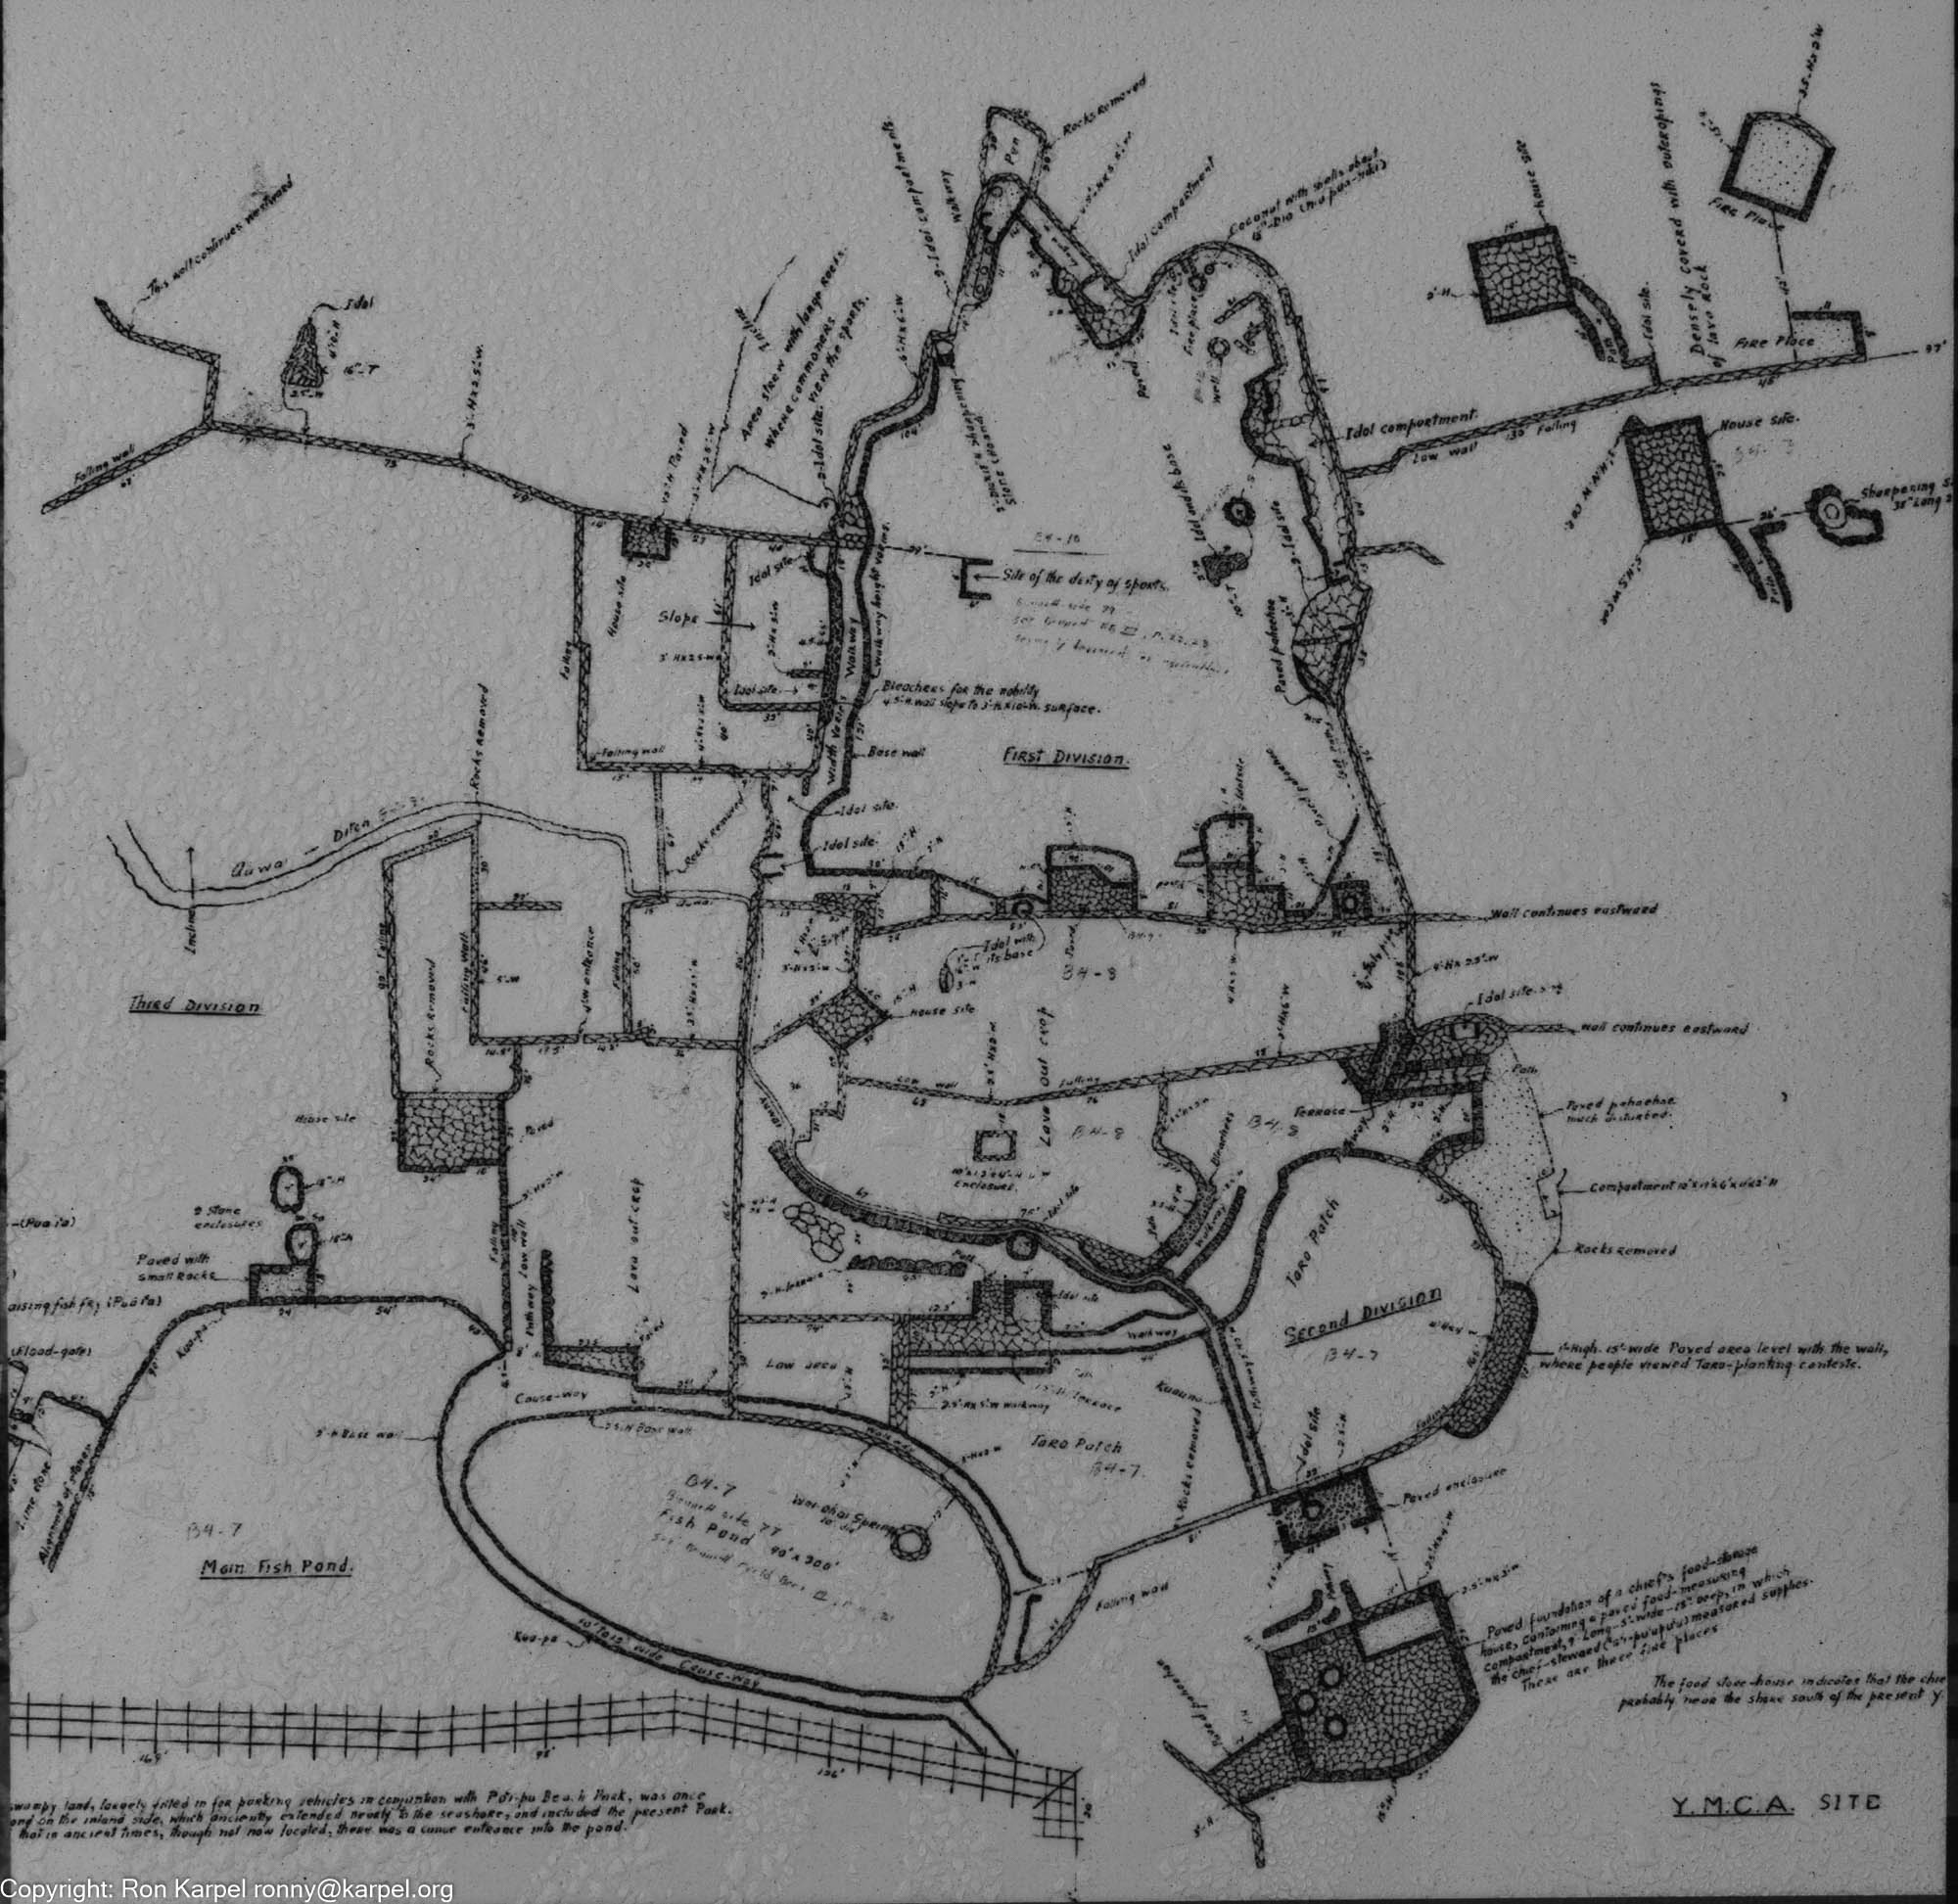 A monochrome map of an ancient Hawaiian village